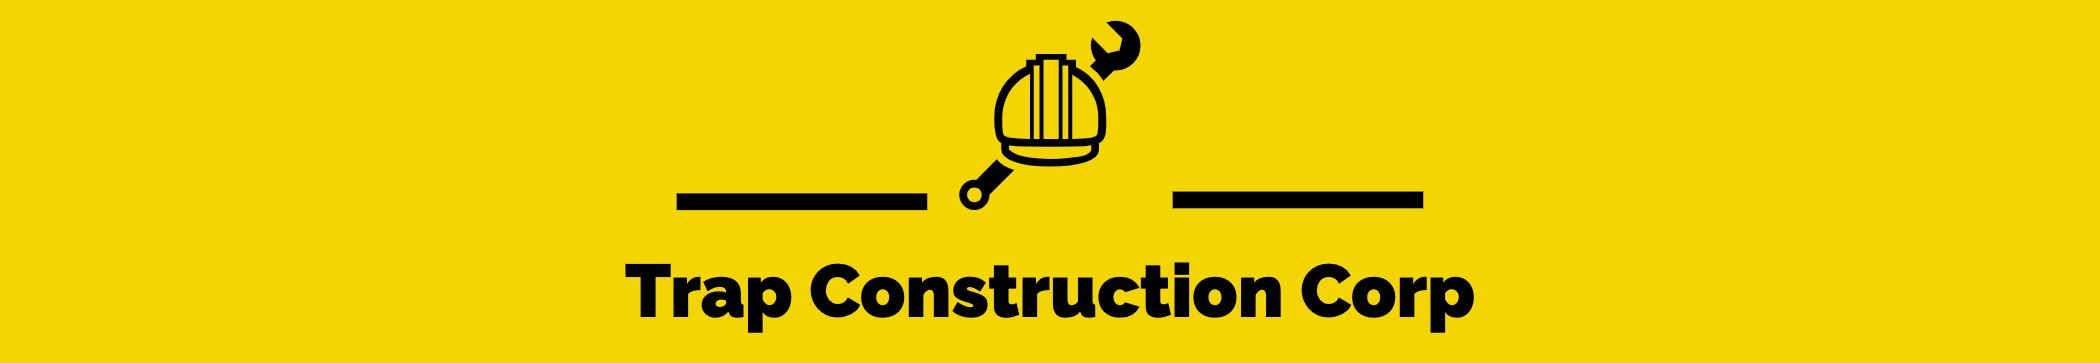 Trap Construction Corp